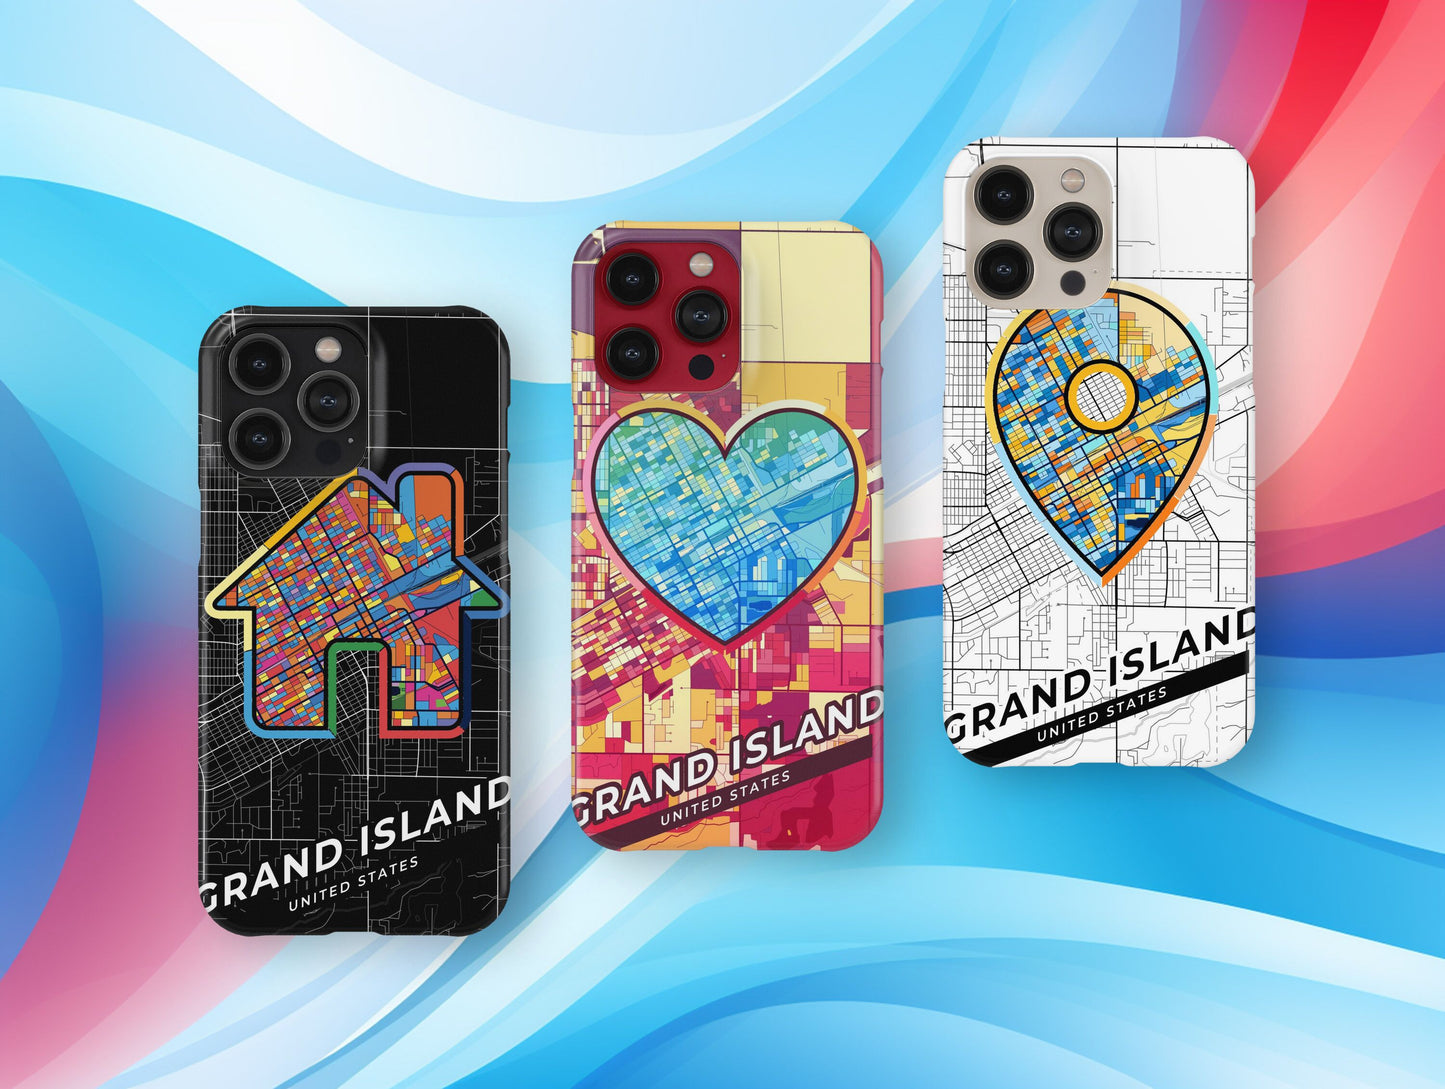 Grand Island Nebraska slim phone case with colorful icon. Birthday, wedding or housewarming gift. Couple match cases.